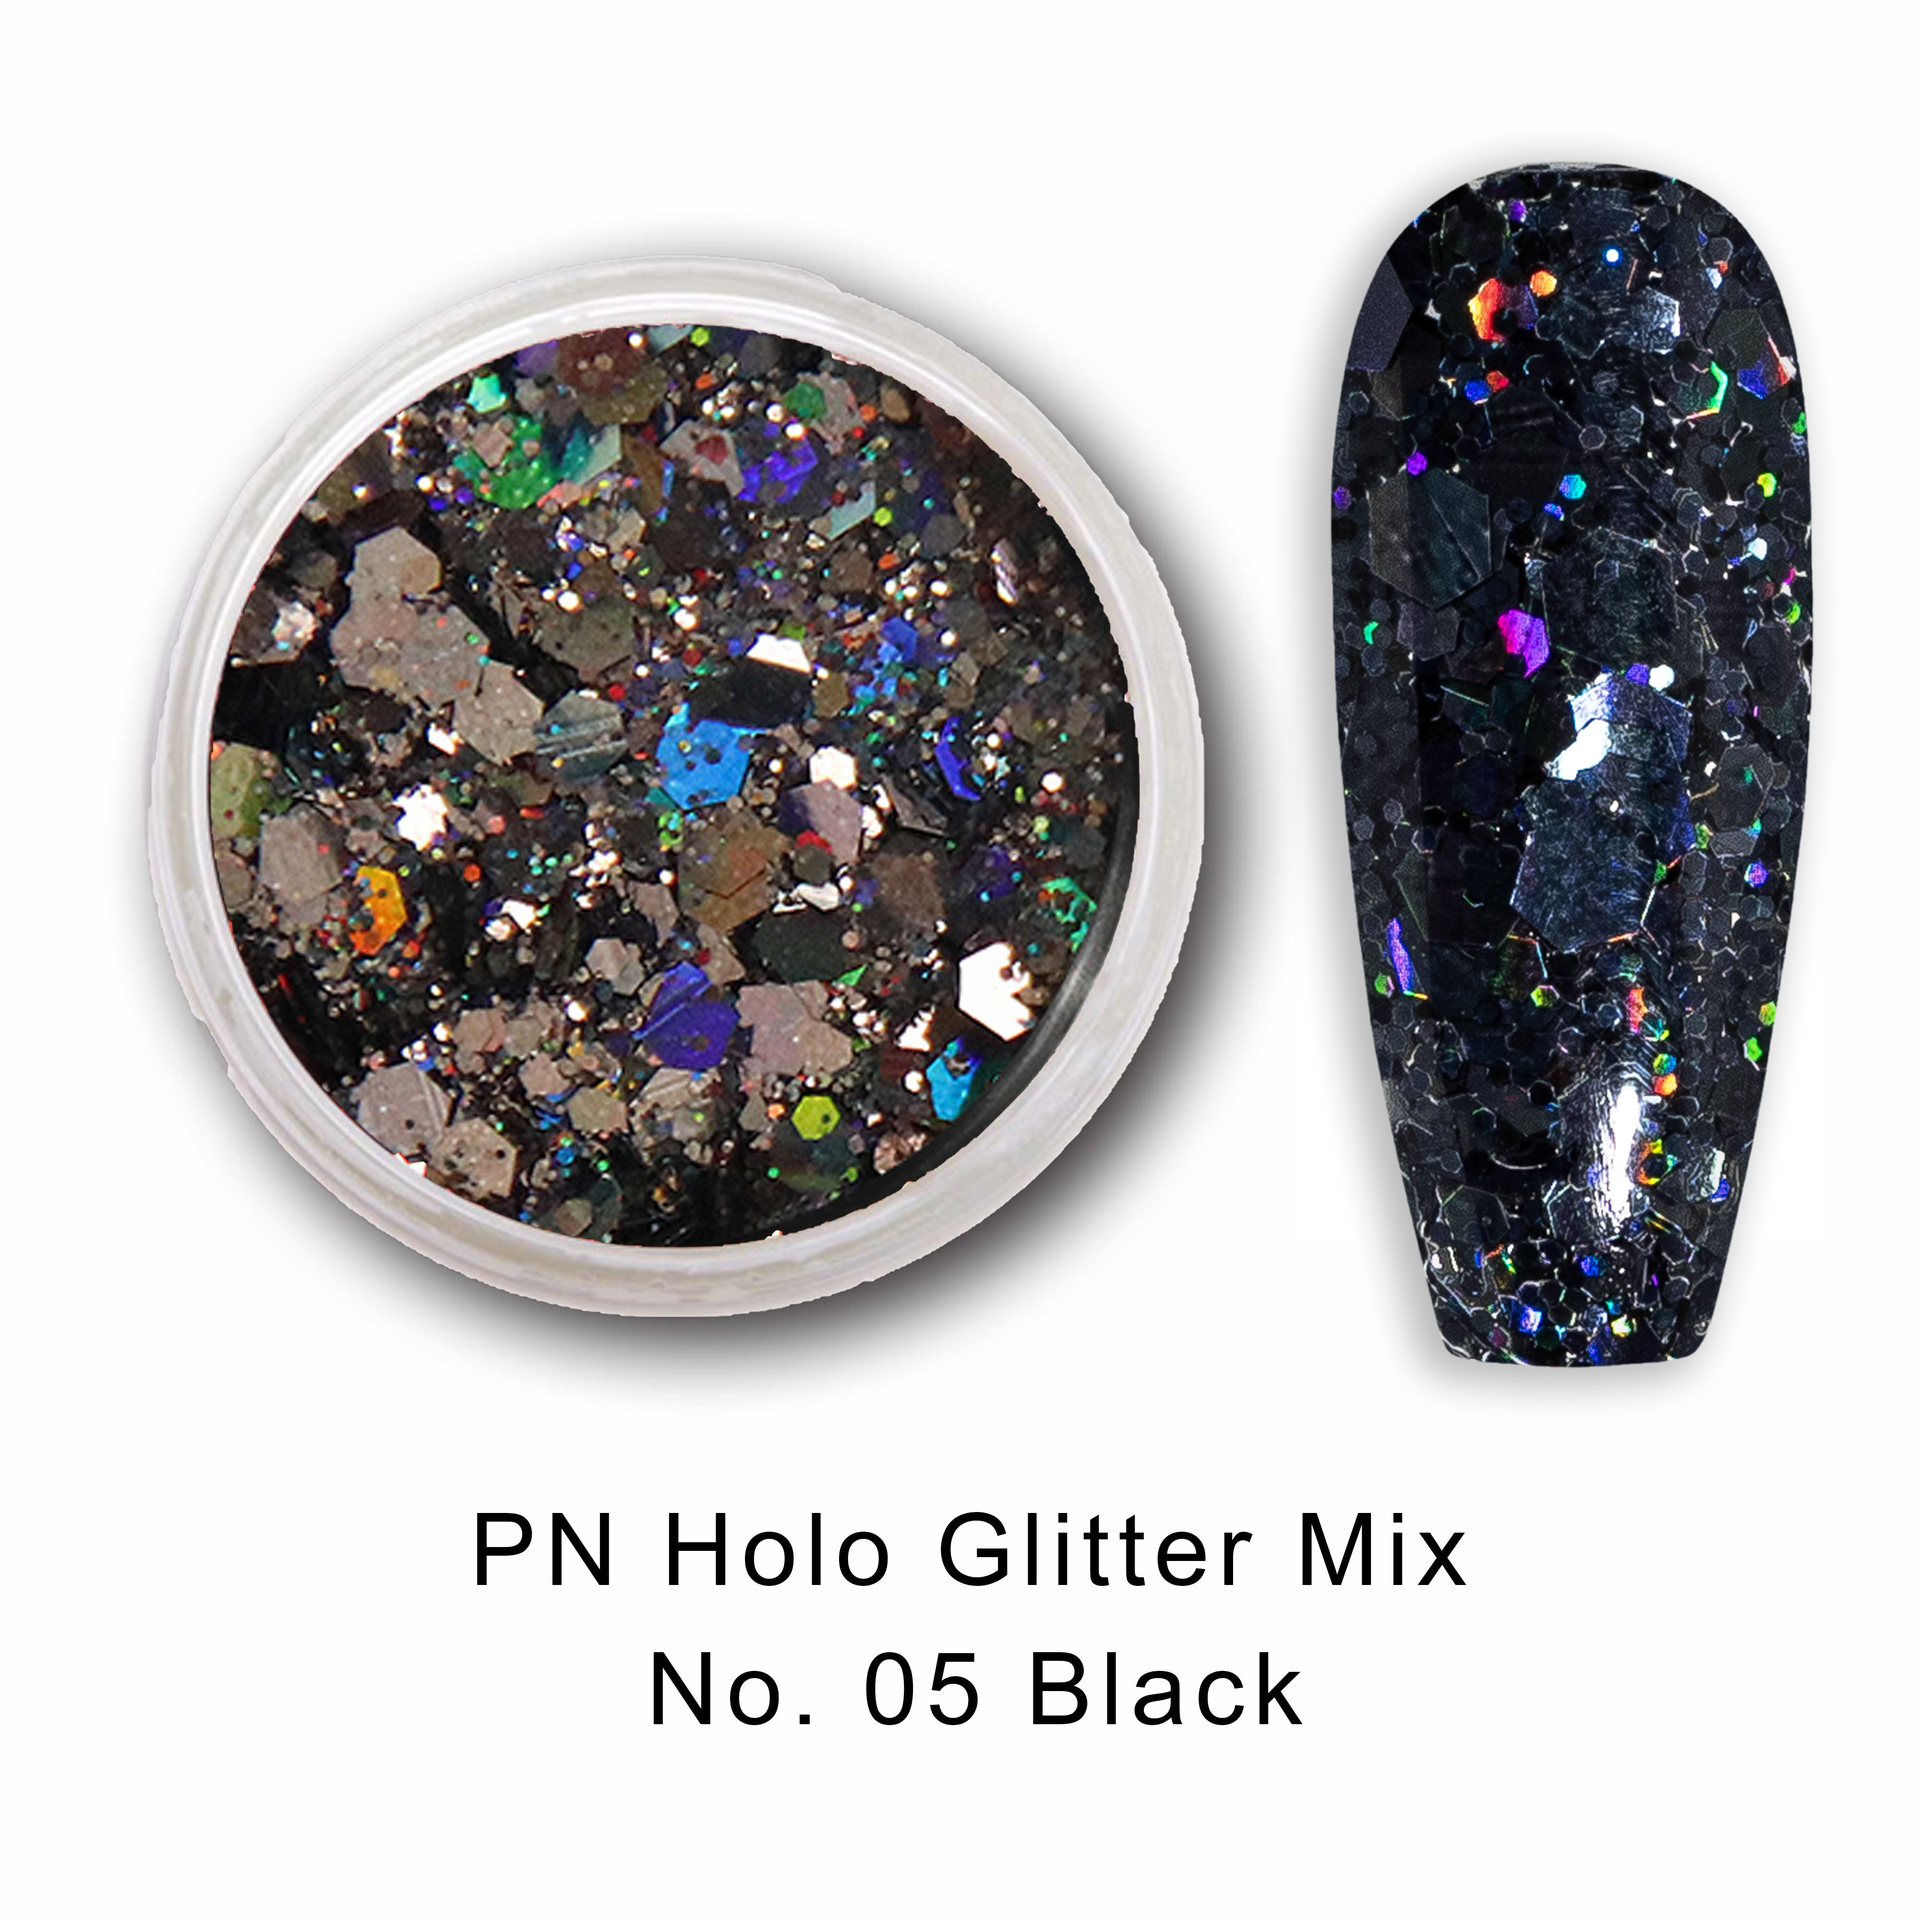 PN Holo glitter mix No.05 Black